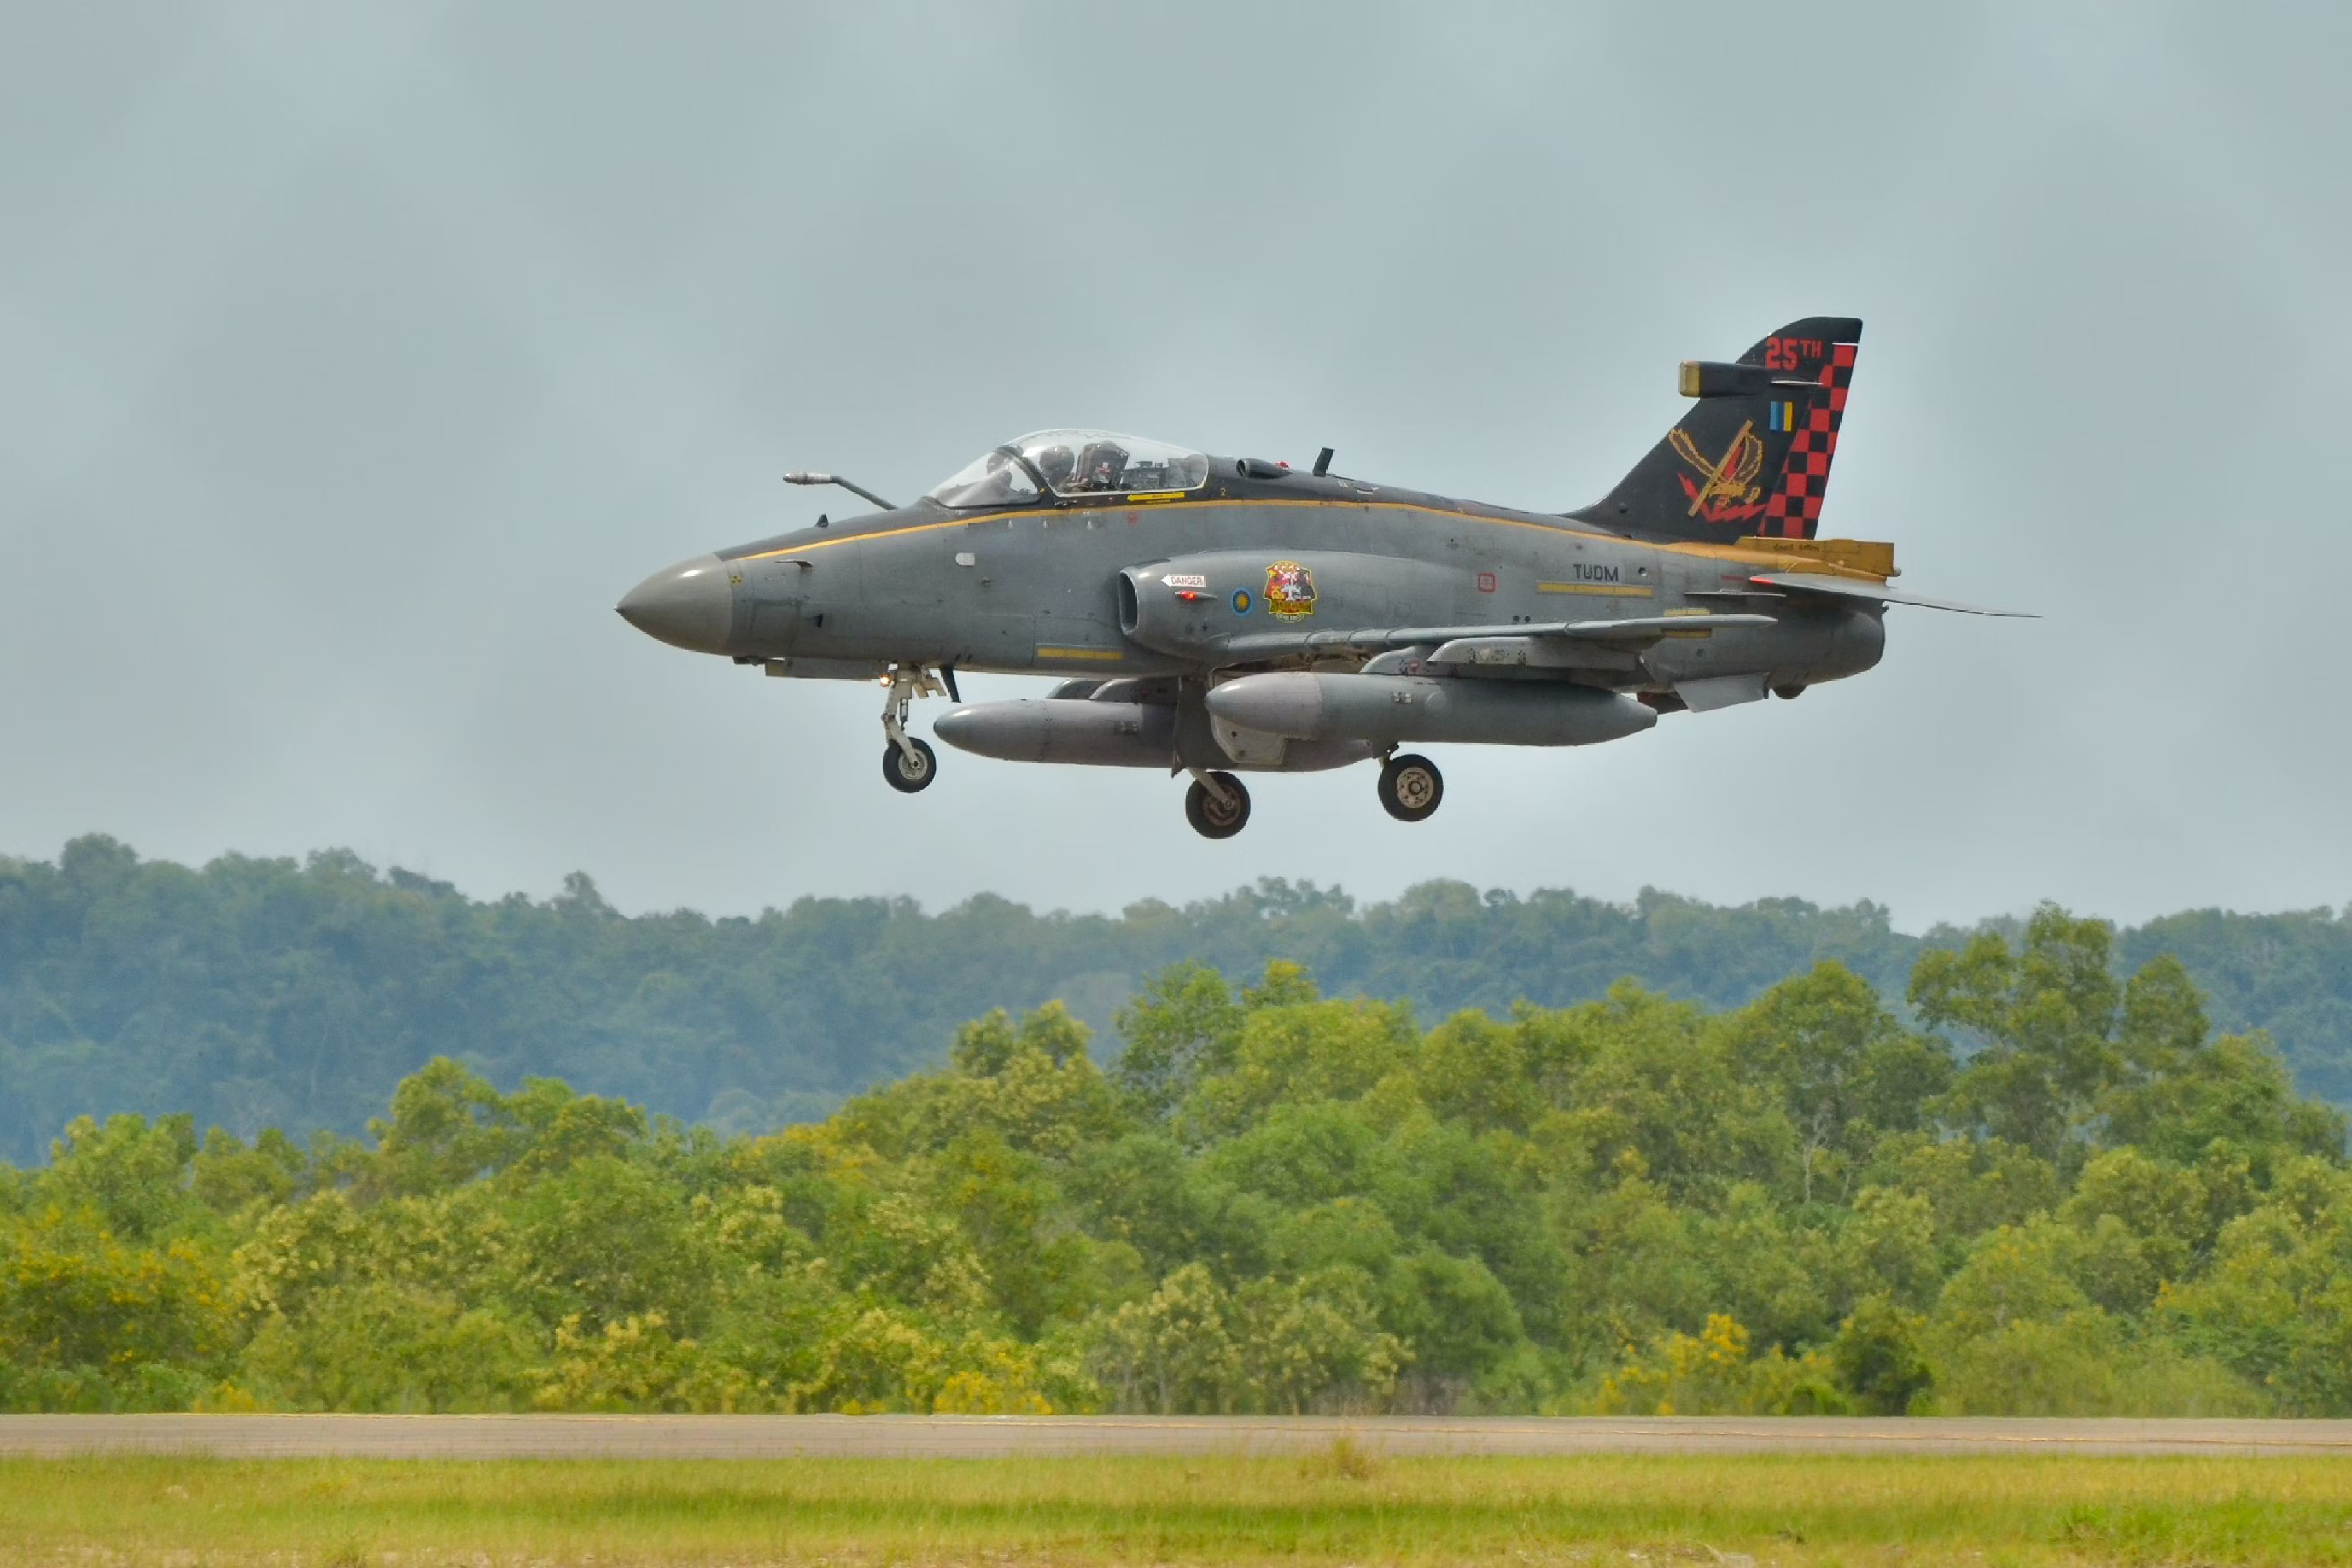 A Royal Malaysia Air Force Bae Hawk Mk 208 jet landing.